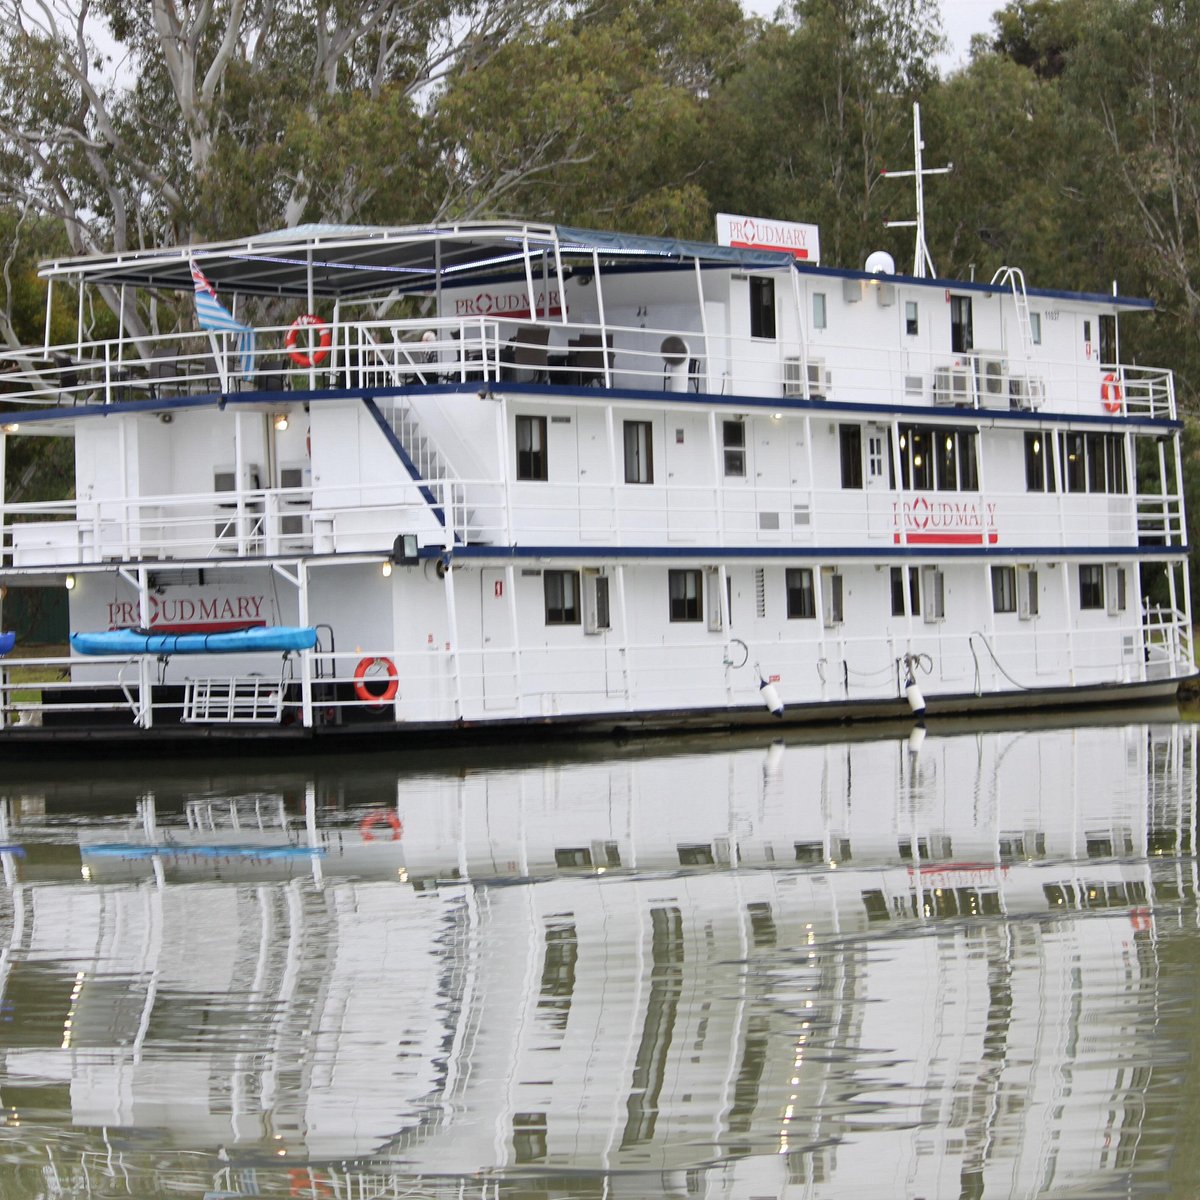 murray river day cruises 2022